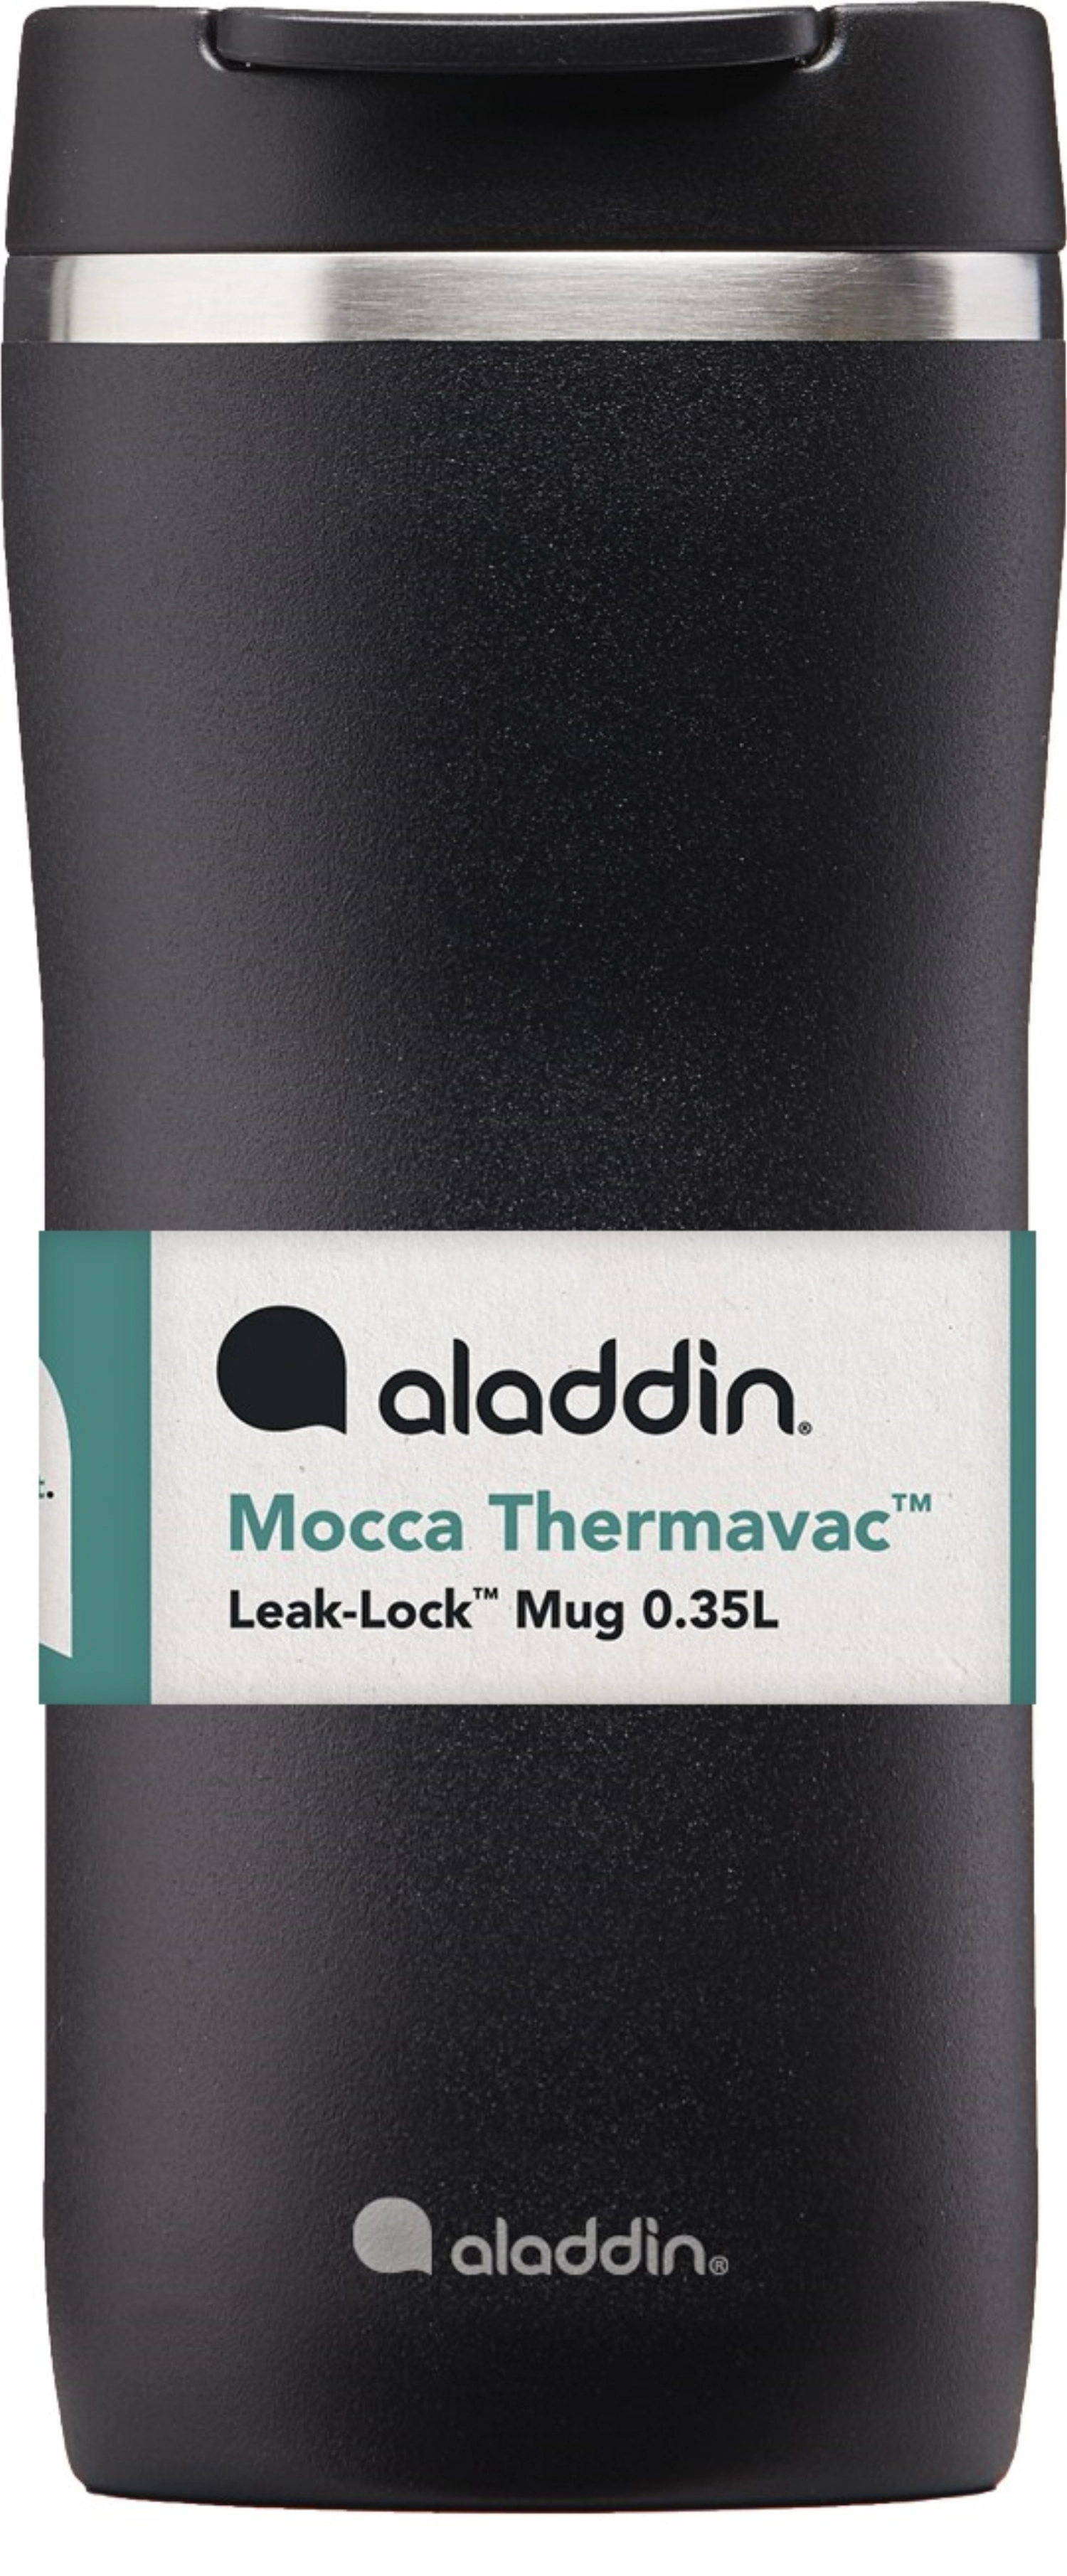 Aladdin barista mocca thermavac™ leak-lock™ stainless steel